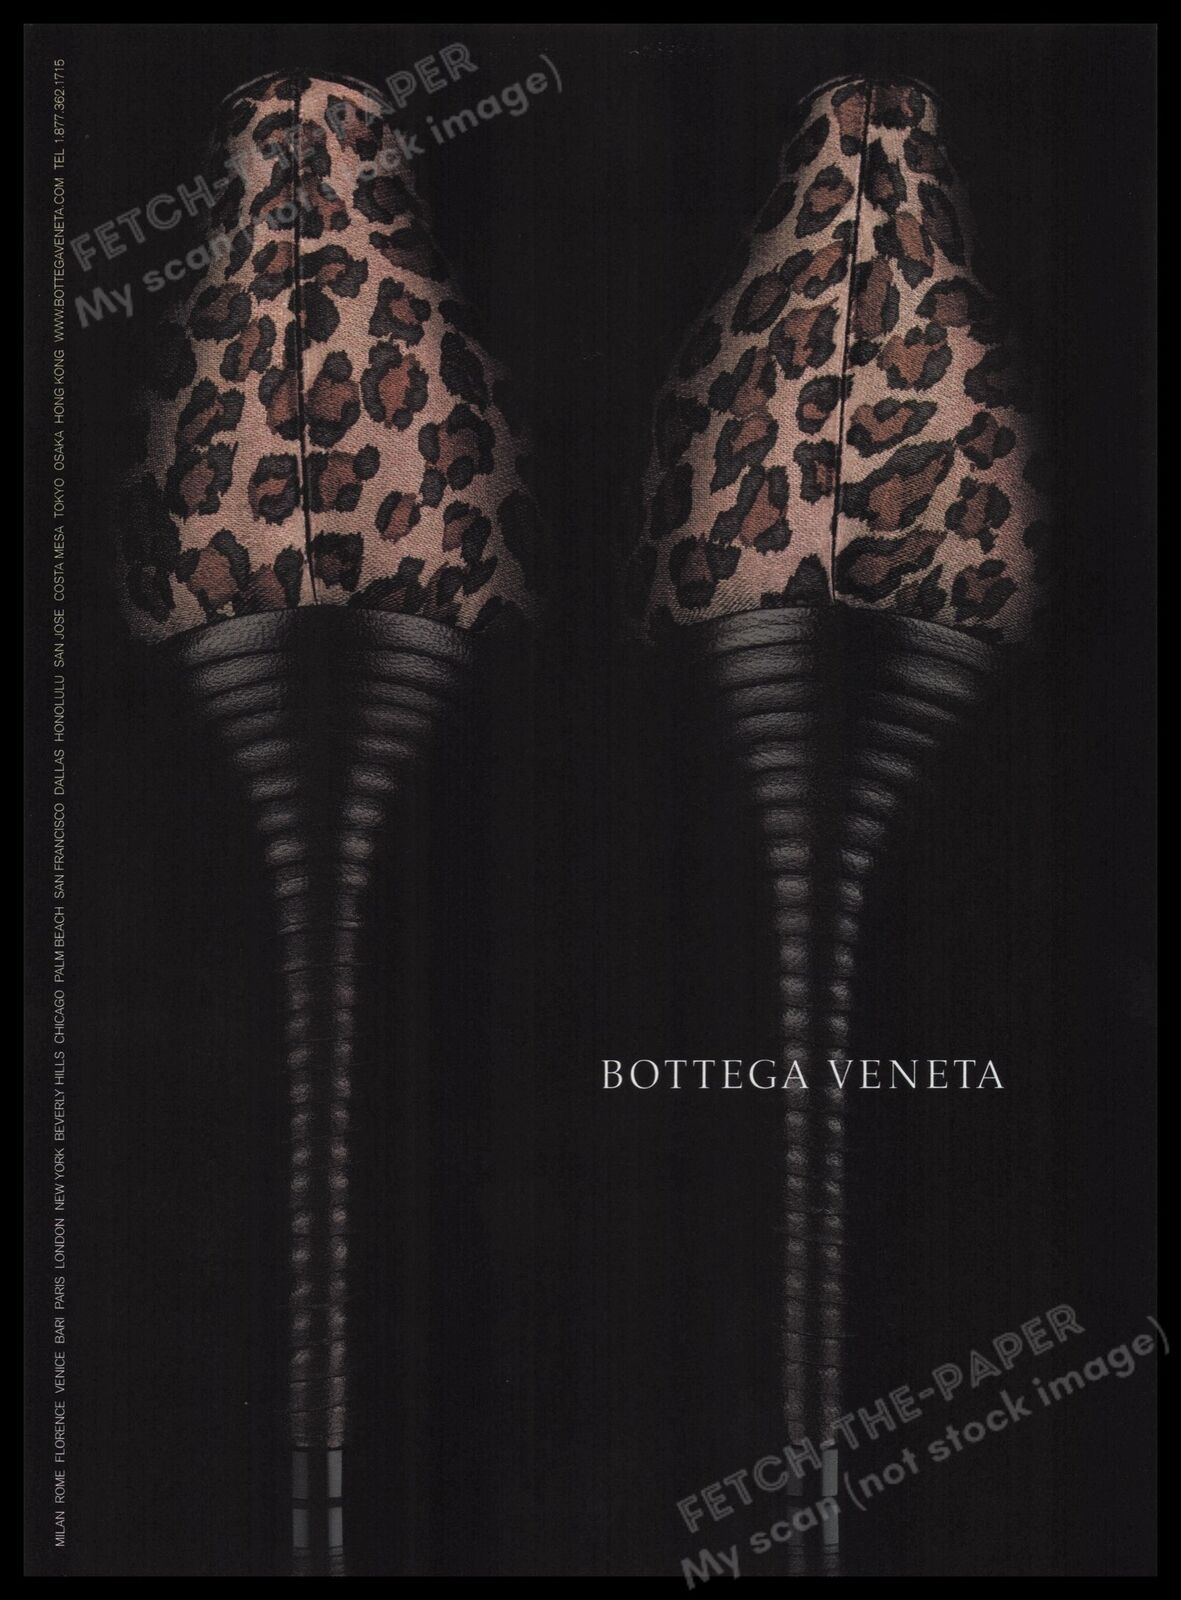 Bottega Veneta Shoes Heels 2000s Print Advertisement Ad 2002 Stiletto